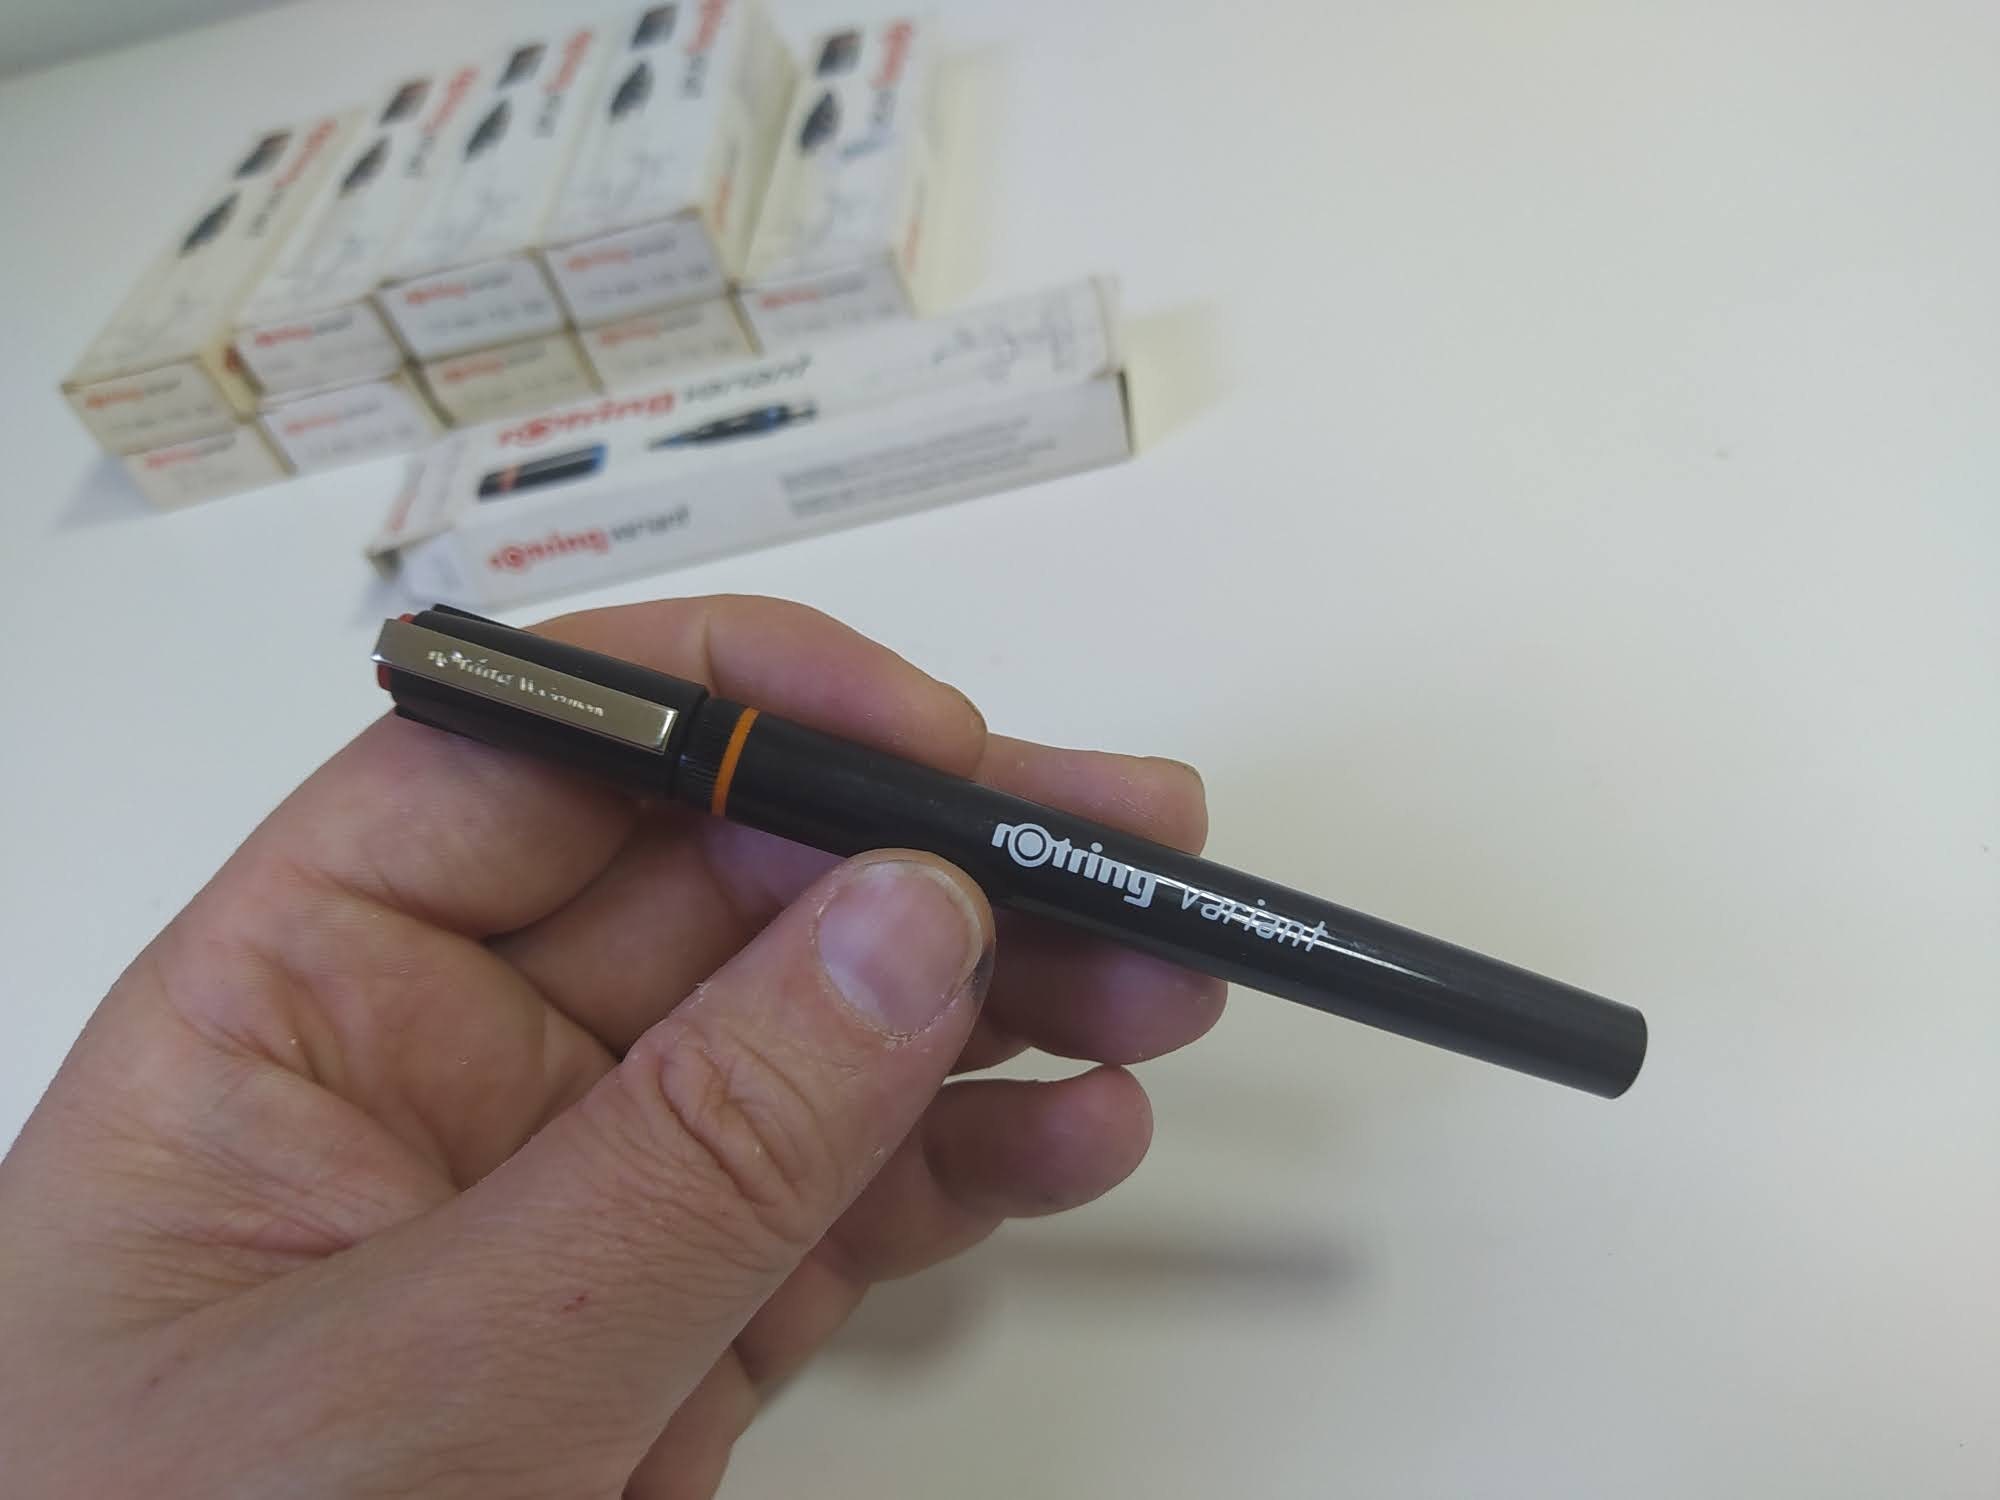 Vintage rOtring Technical Pen (Variant) 1.20 mm - New with key nib Art. 110  120